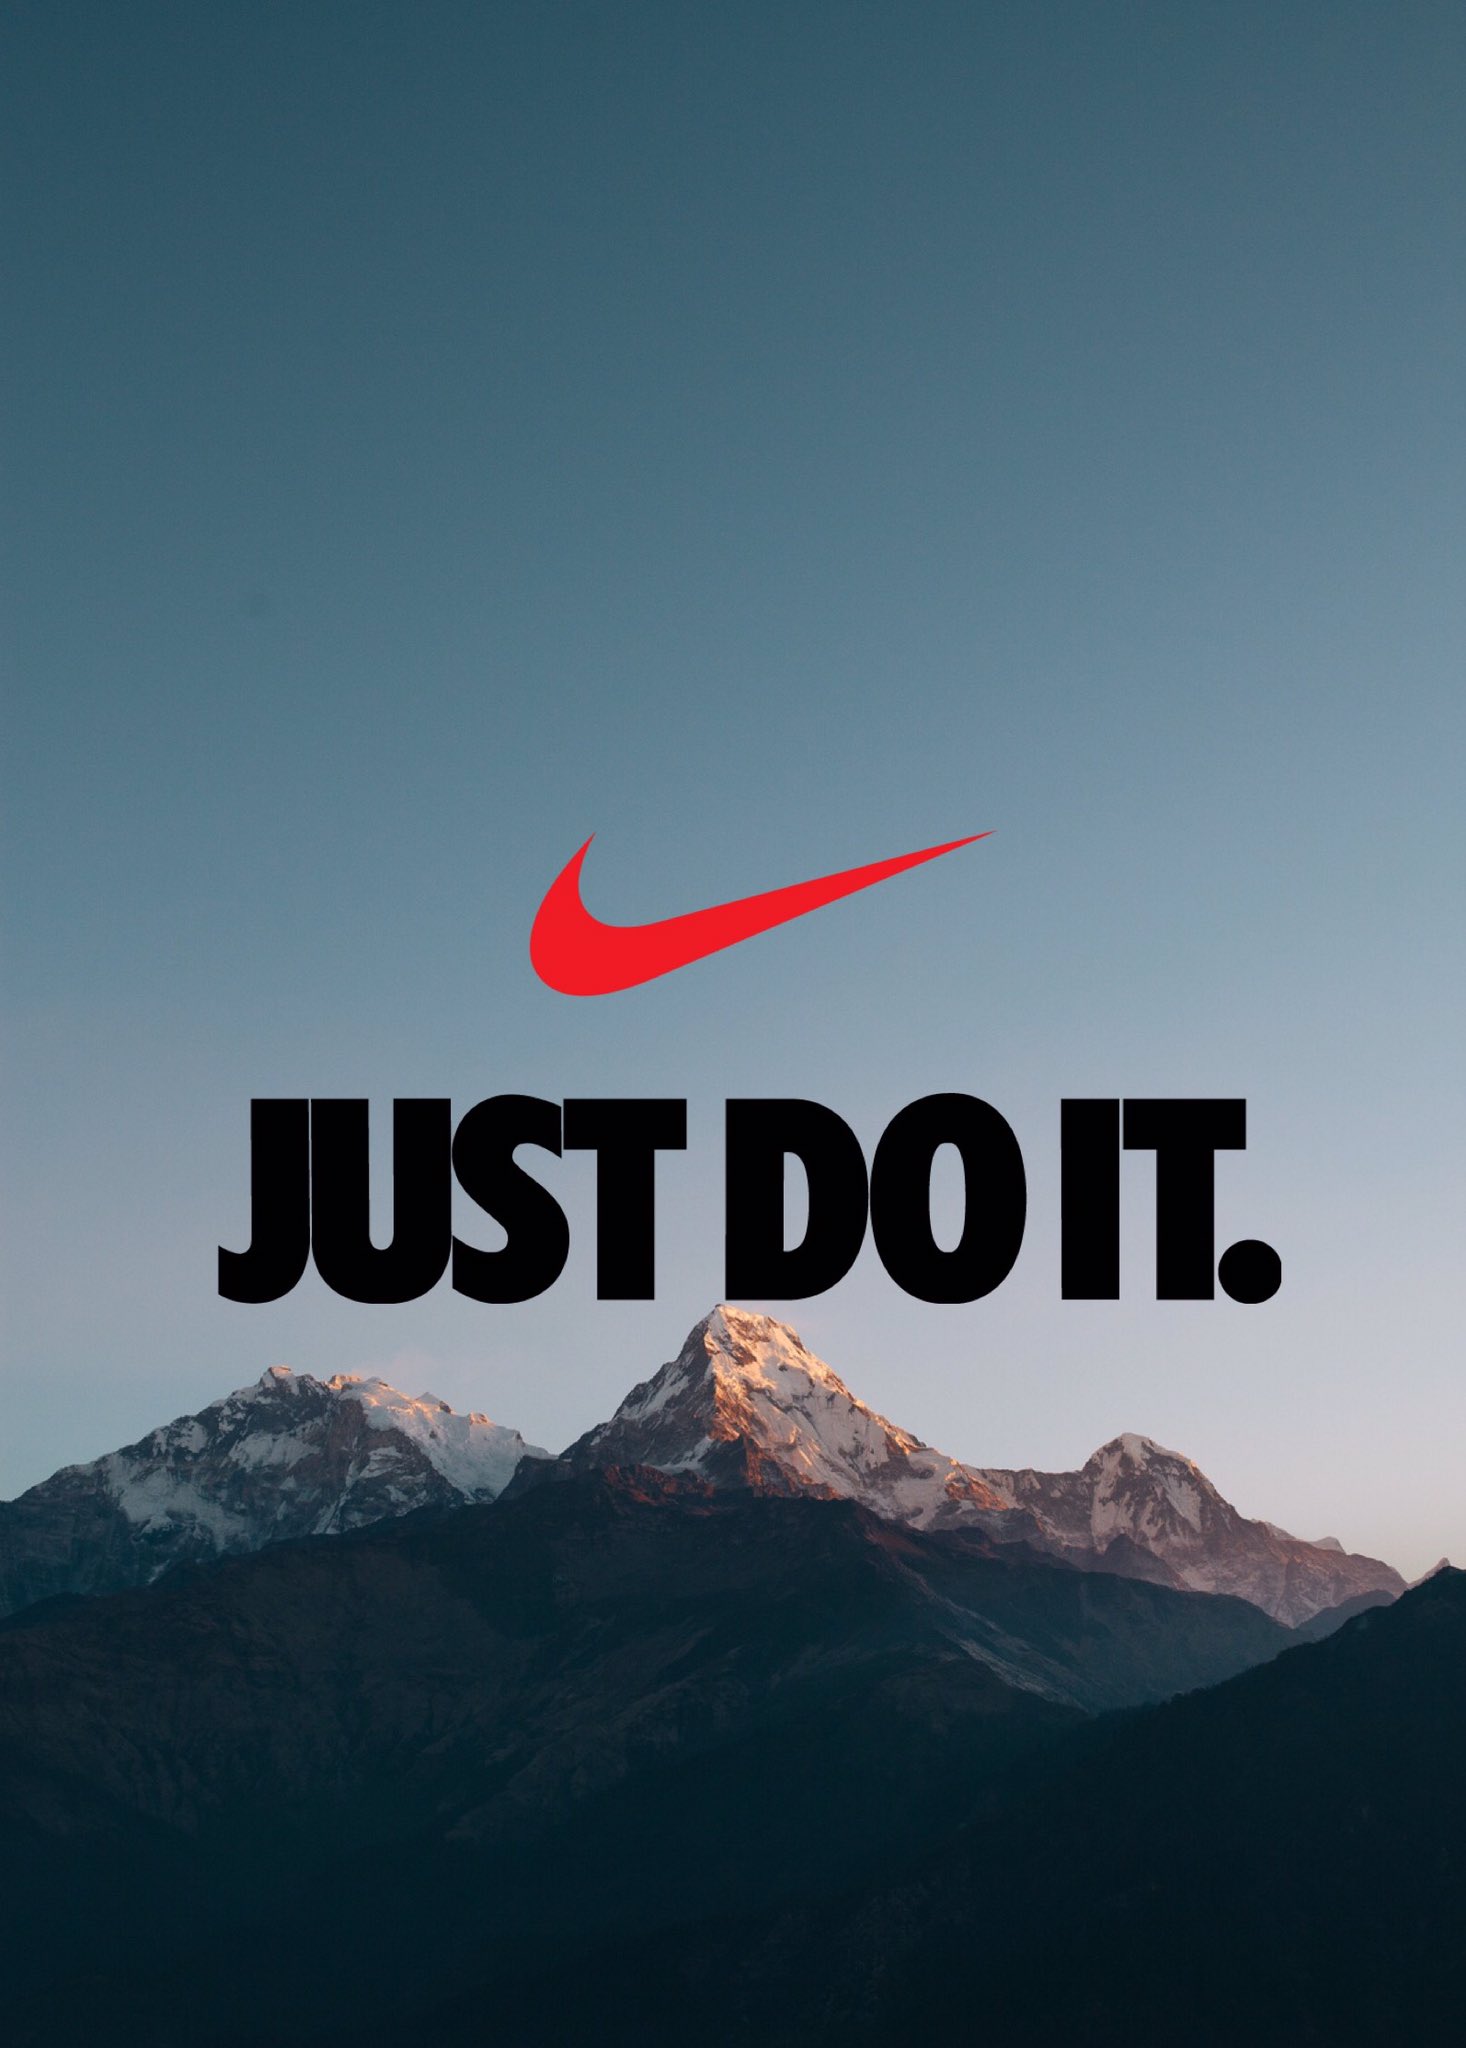 Genealogy notice Peer iphone wallpaper on Twitter: "Nike just do it wallpaper #nike #swoosh  #iPhoneWallpaper #wallpaper https://t.co/zTzPJSRkaa" / Twitter